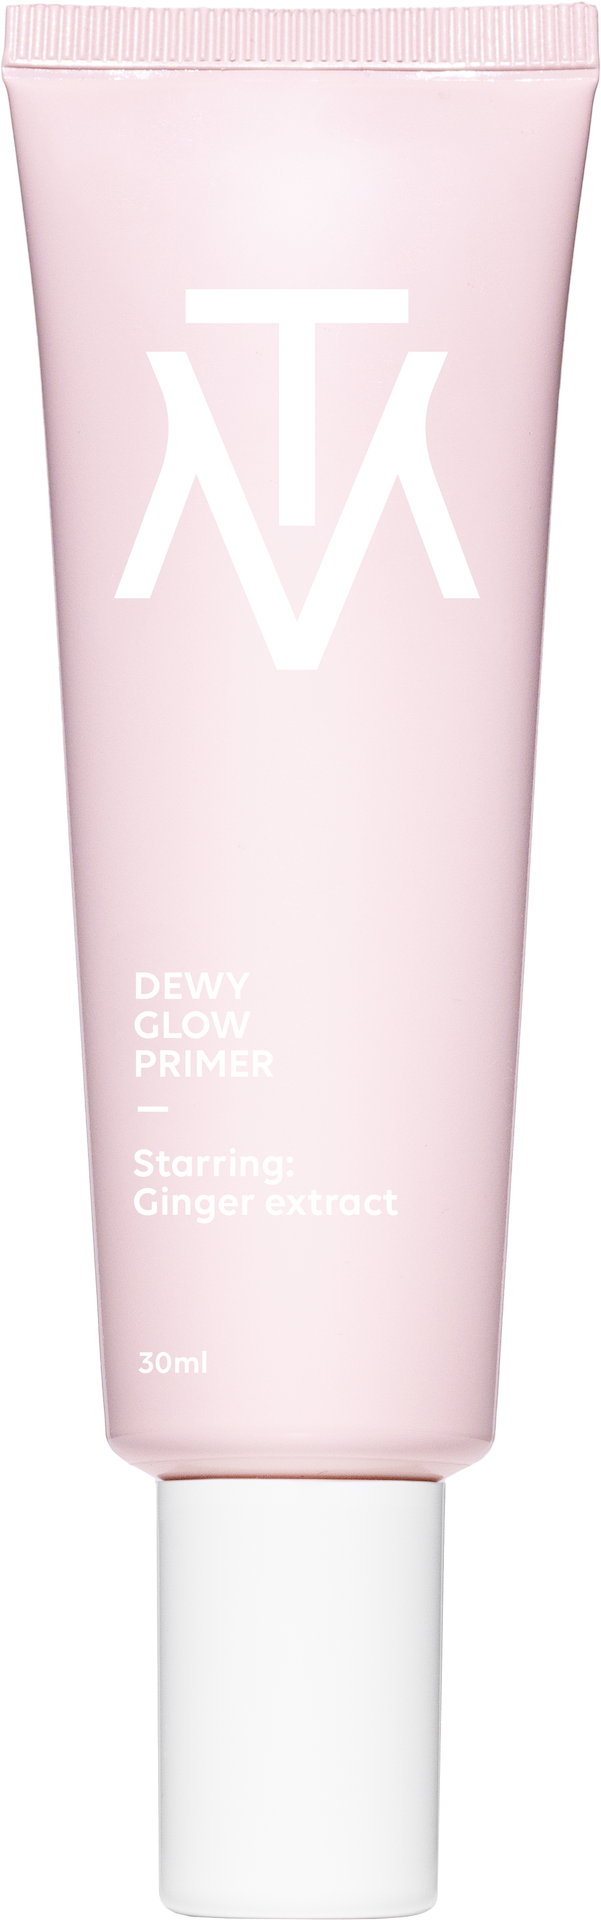 Dewy Glow Primer 30 ml